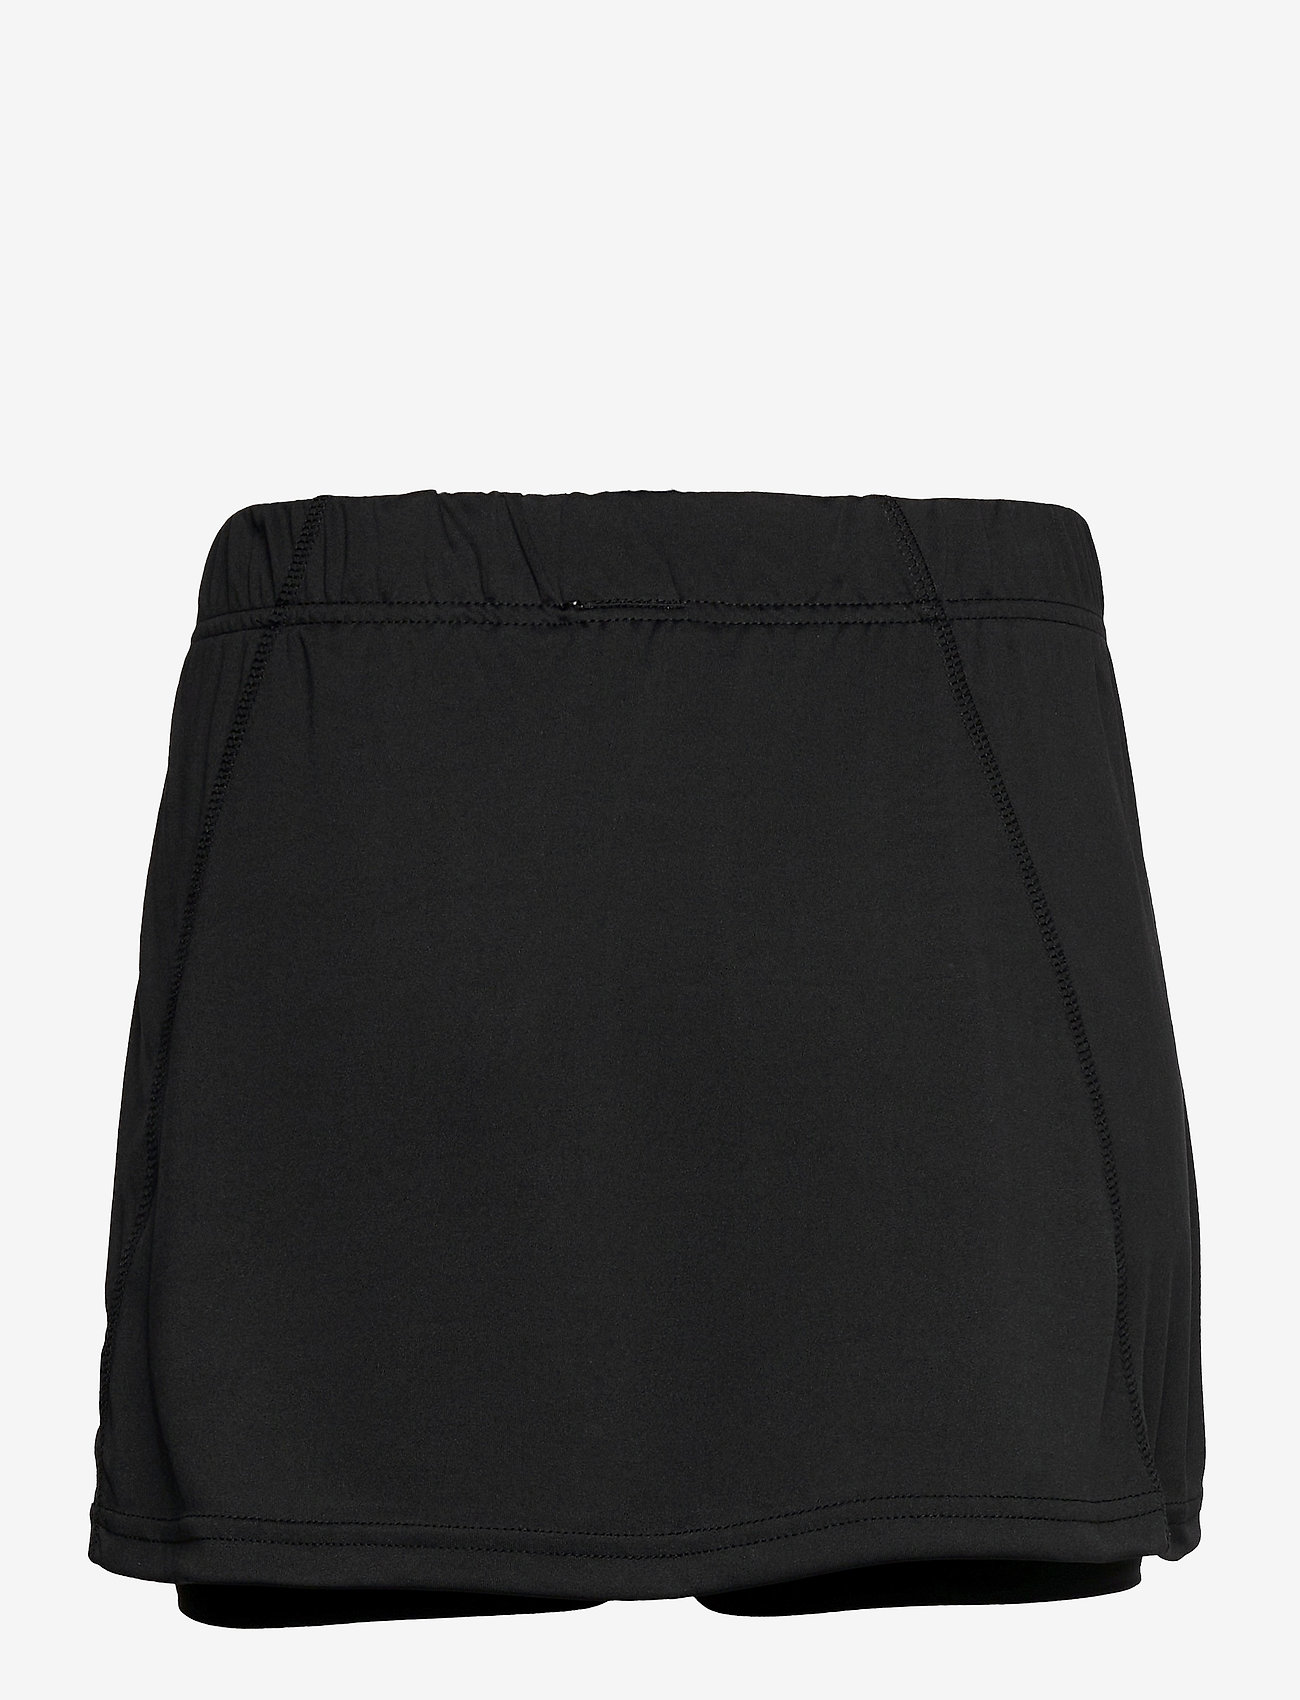 Zerv - ZERV Falcon Womens Skirt - skirts - black - 1